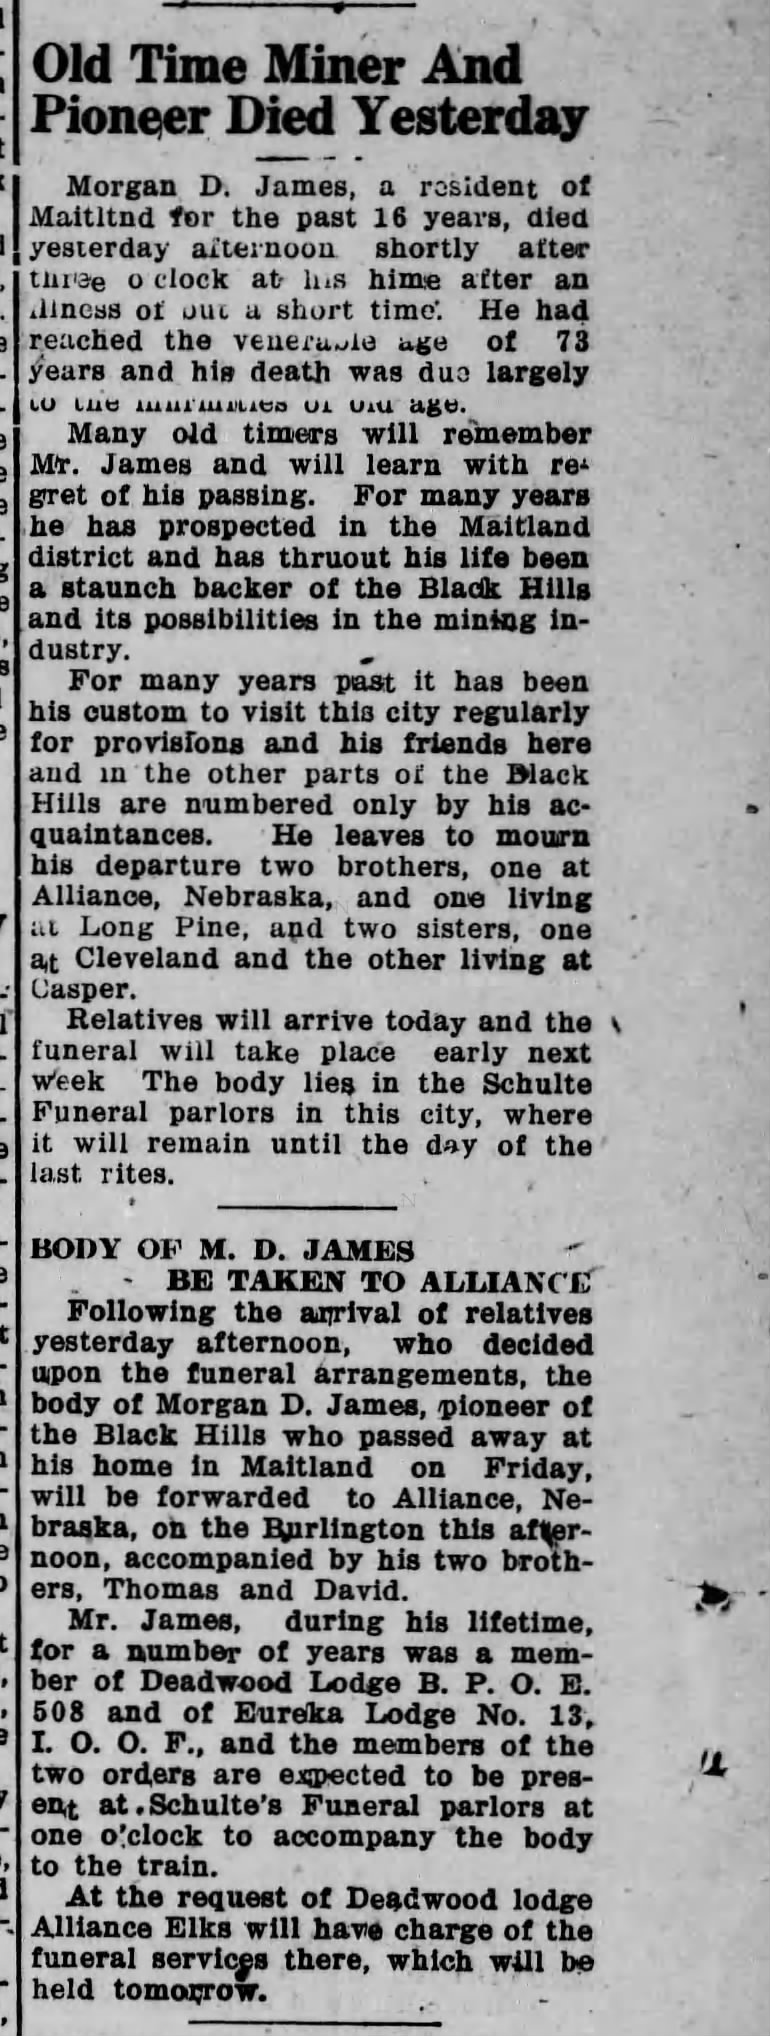 Death of Morgan D. James, Maitland, South Dakota, 1923